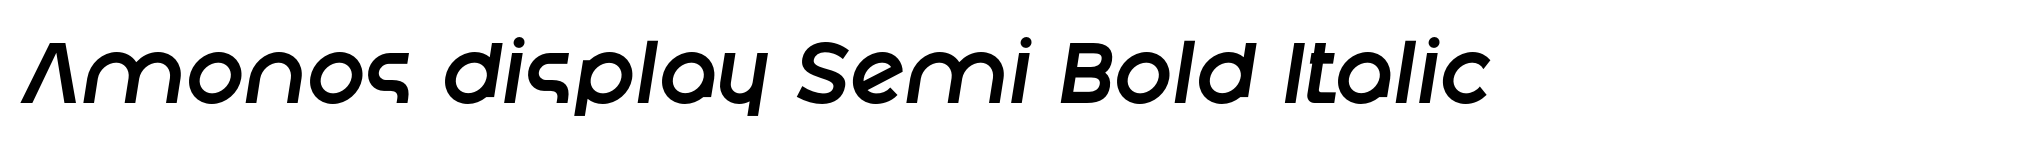 Amonos display Semi Bold Italic image